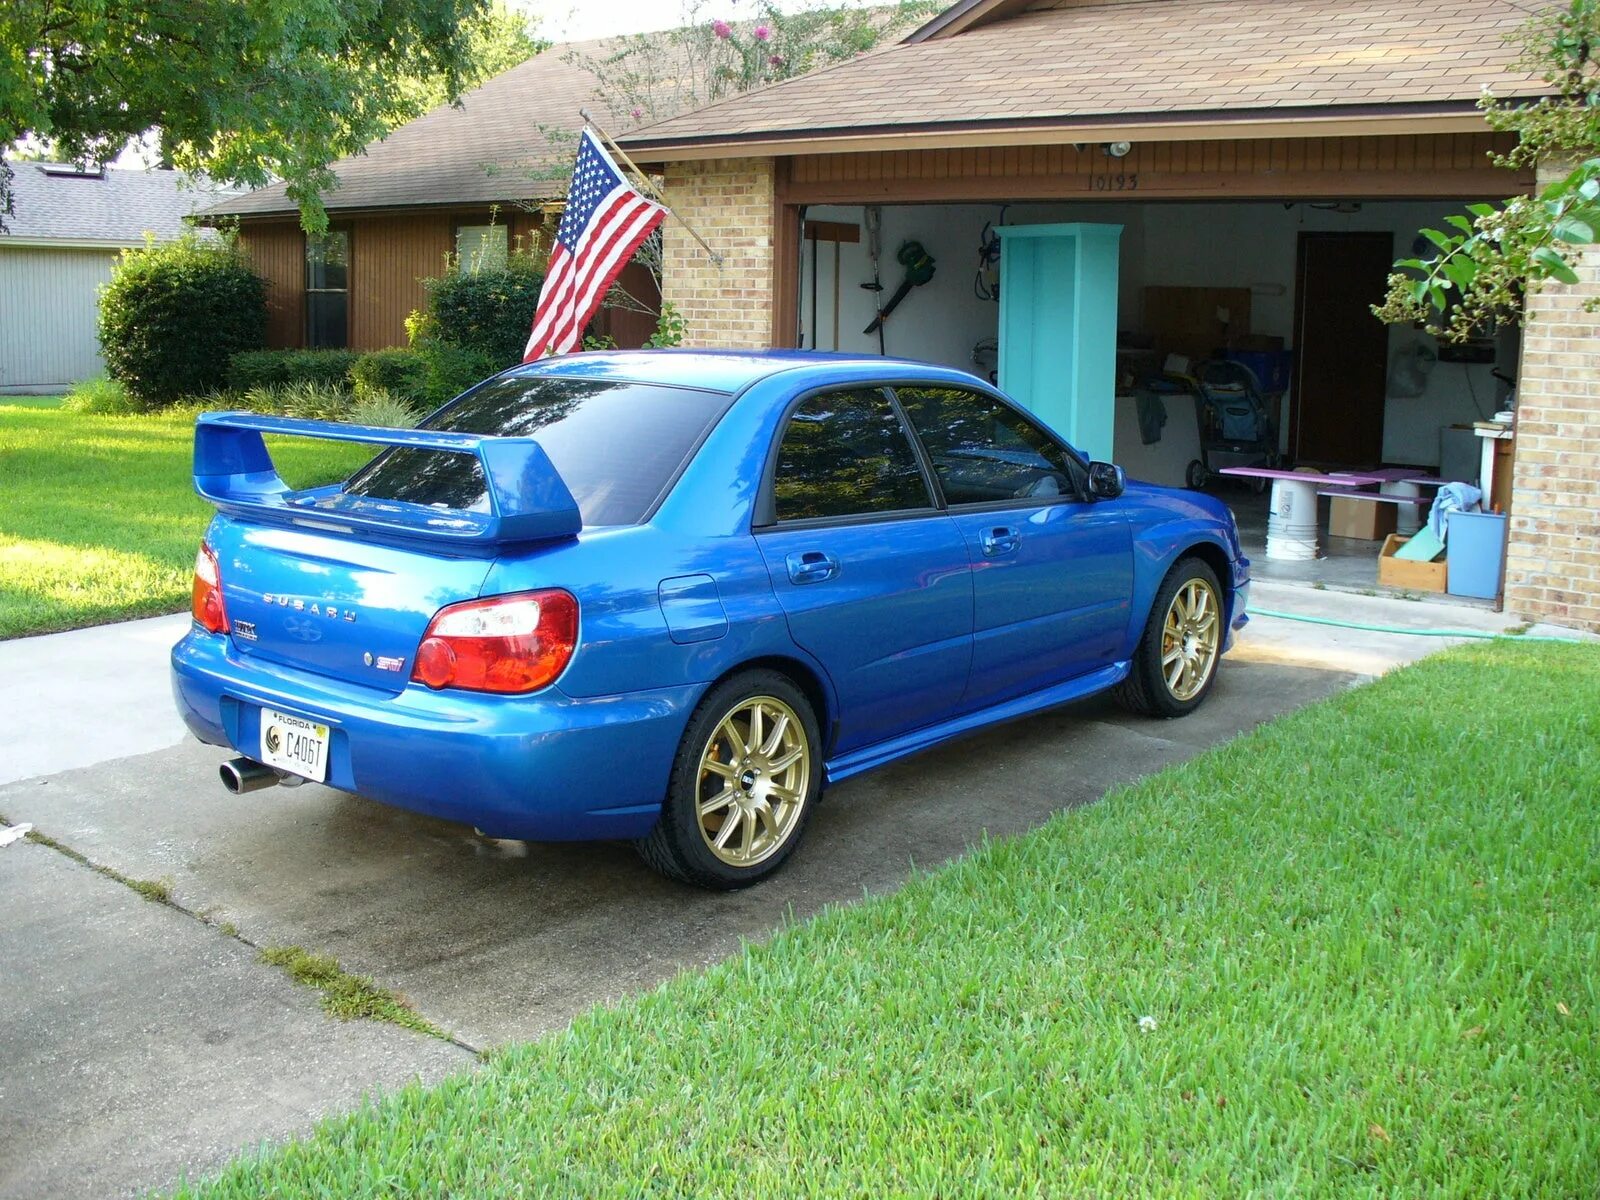 Субару Импреза WRX STI 2004. Subaru Impreza WRX 2004. Subaru WRX 2004. Субару Импреза WRX 2004. Wrx sti 2004